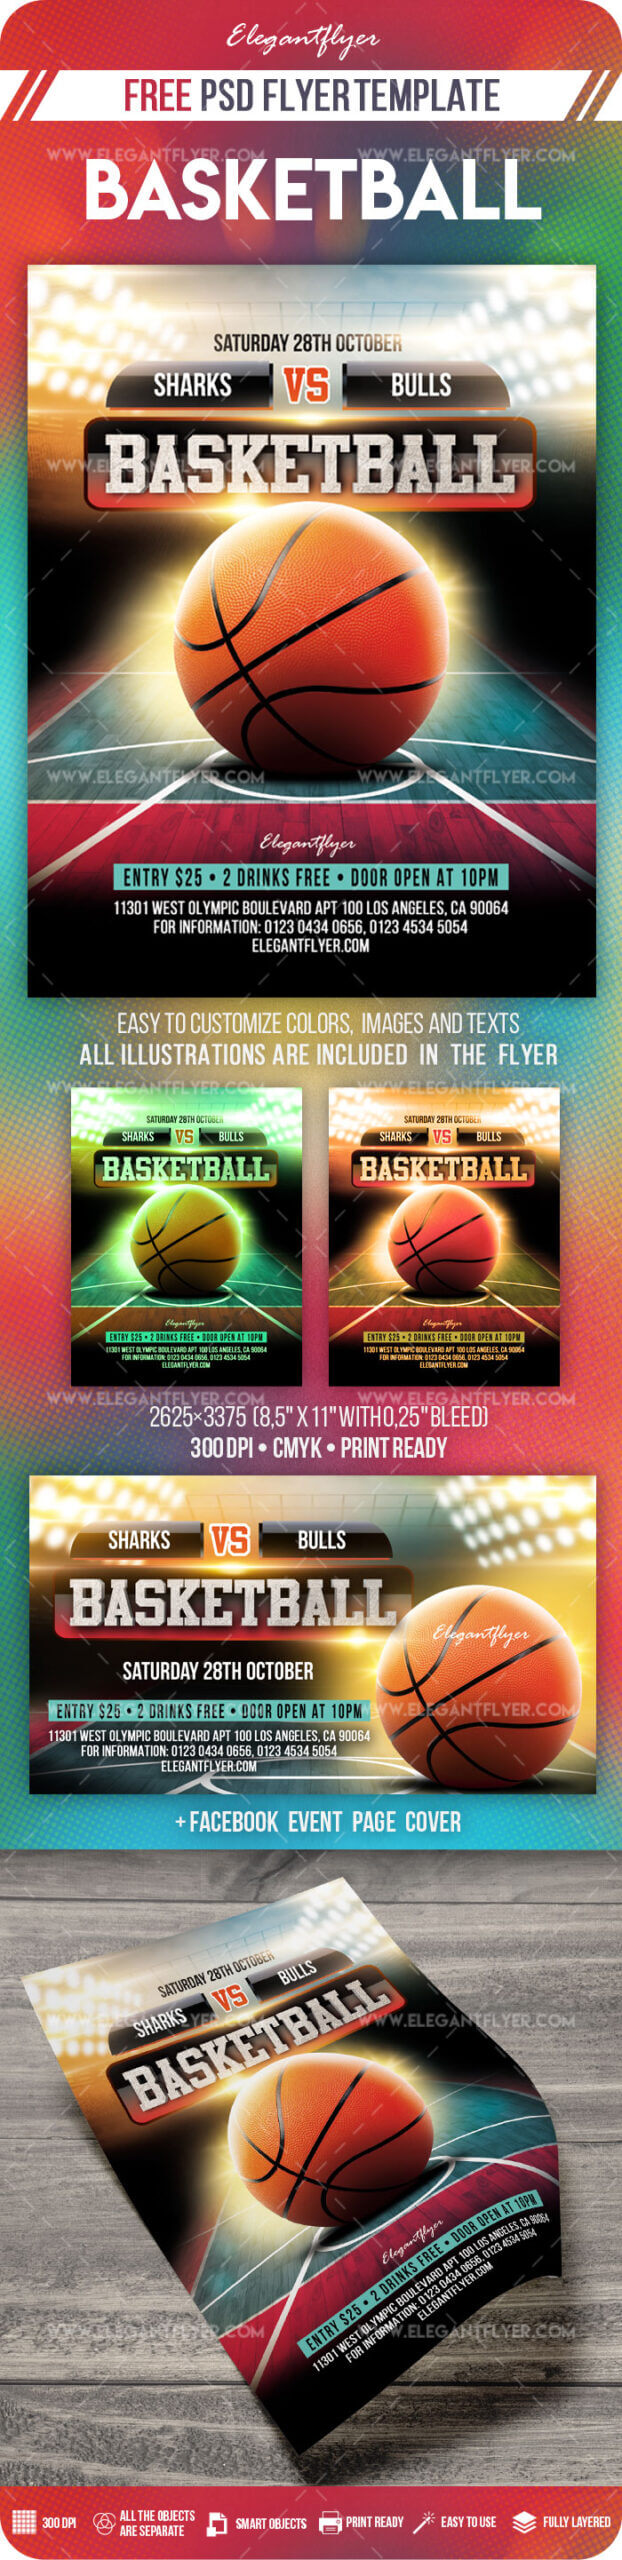 015 Basketball Camp Brochure Template Free Bigpreview Flyer With Basketball Camp Brochure Template